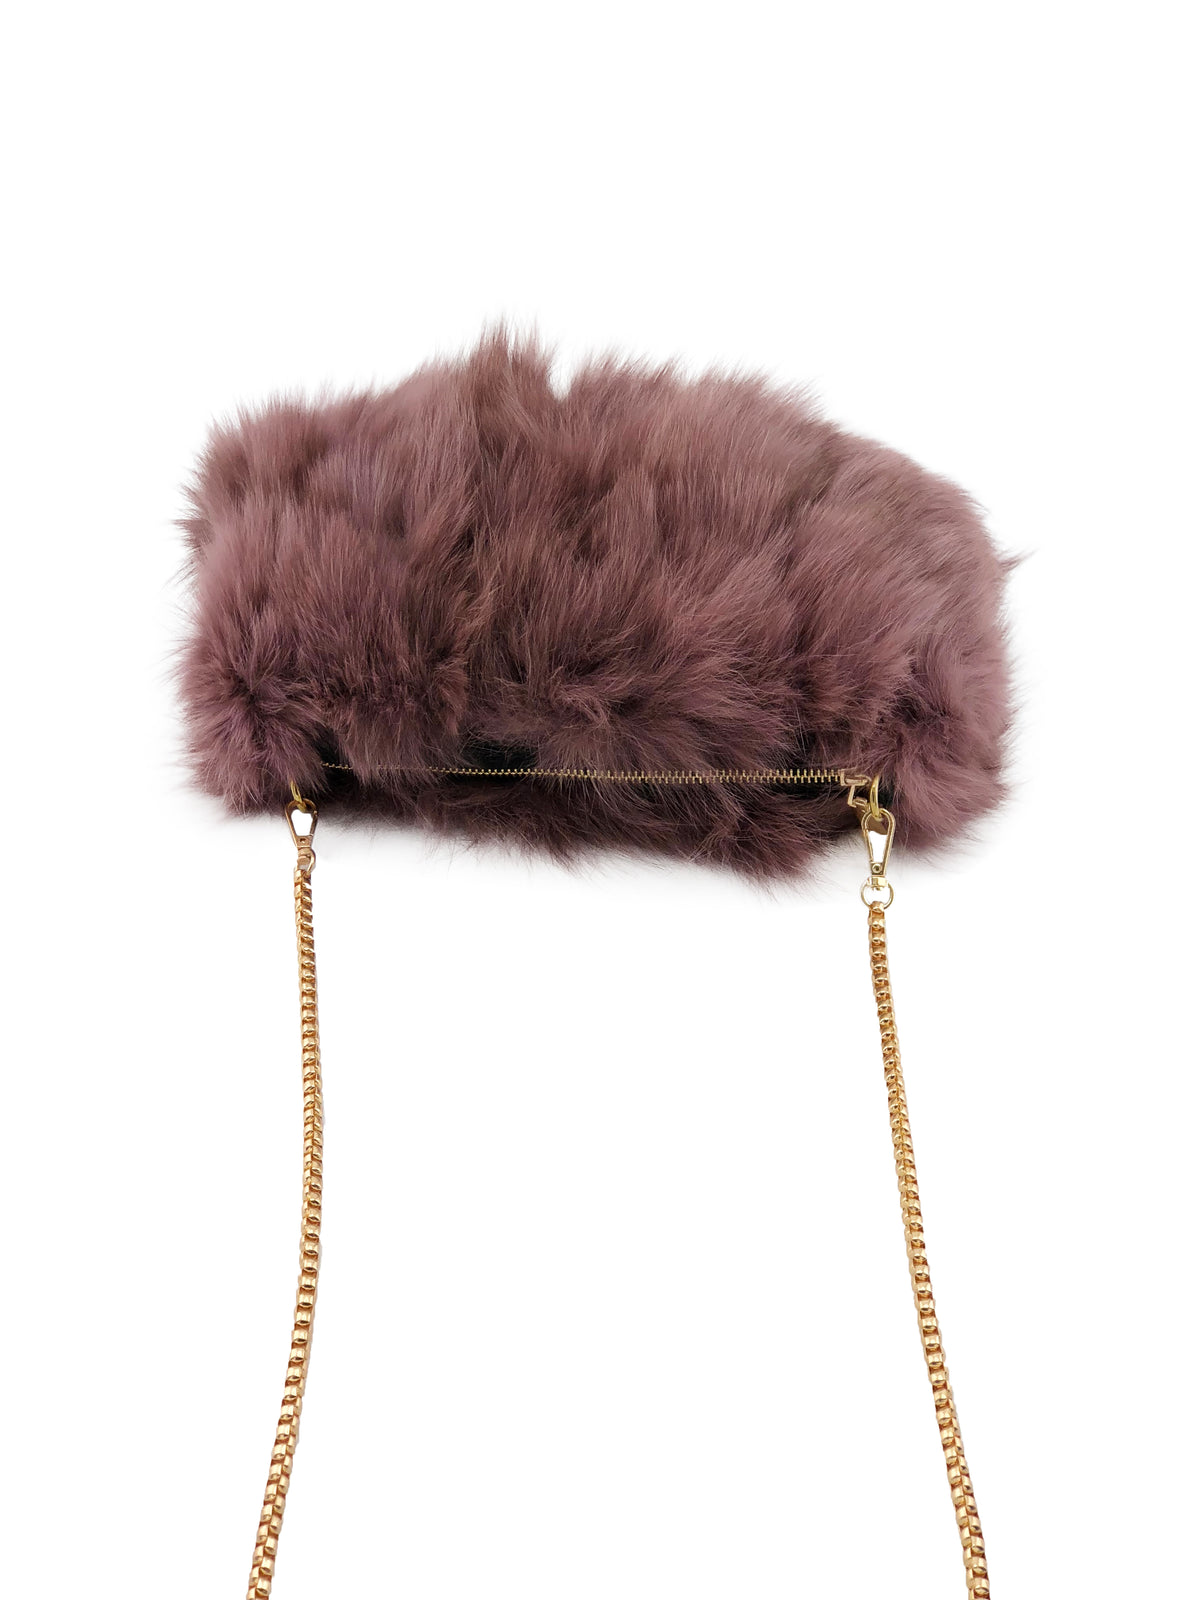 Fox Fur Muff Handbag with Gold Chain - paulamariecollection